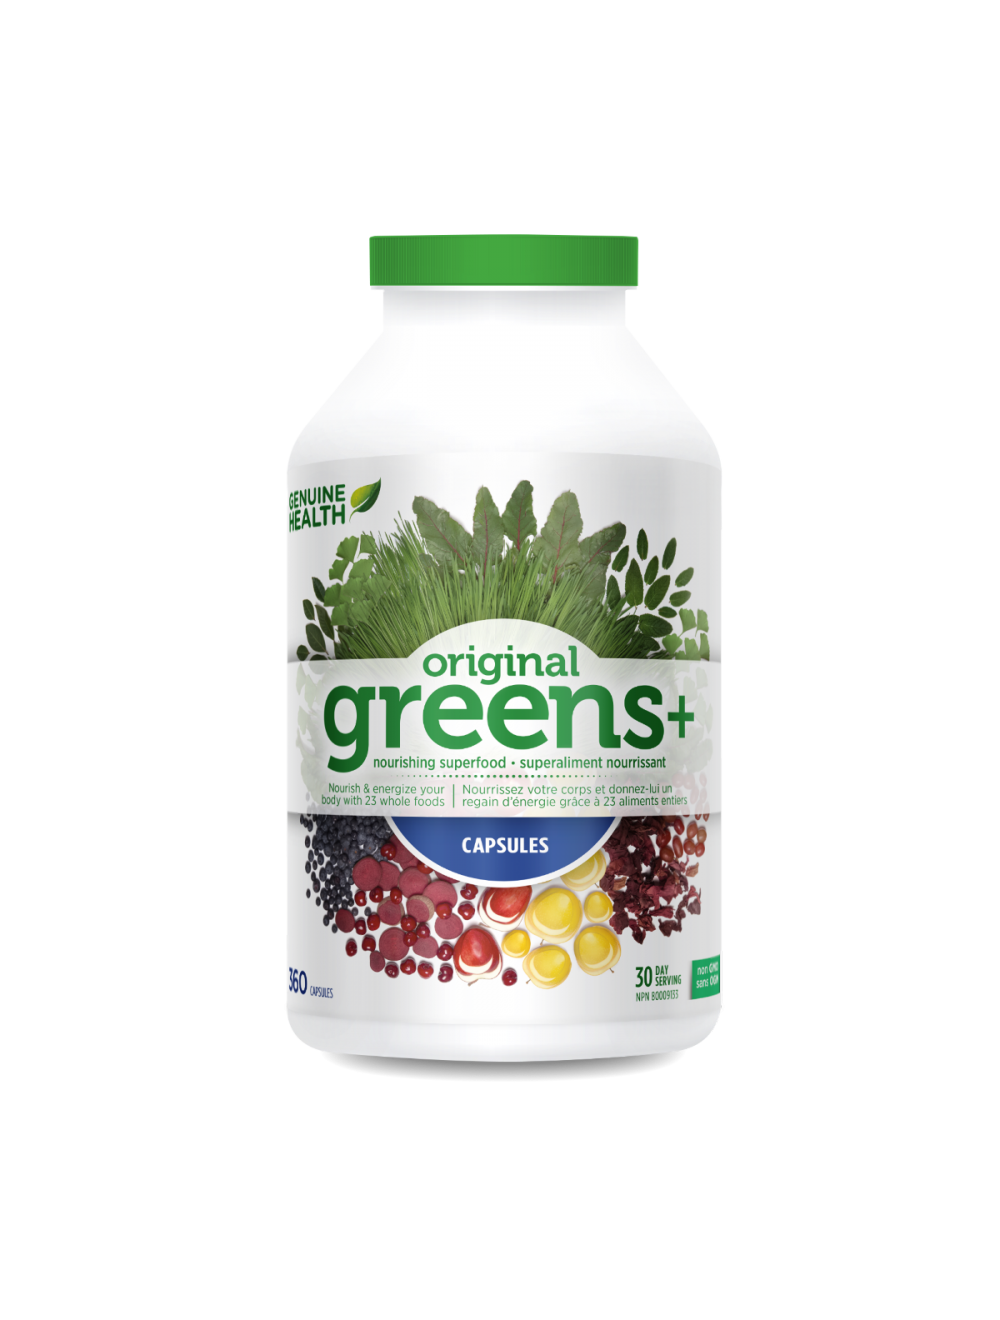 Genuine Health greens+ capsules-2